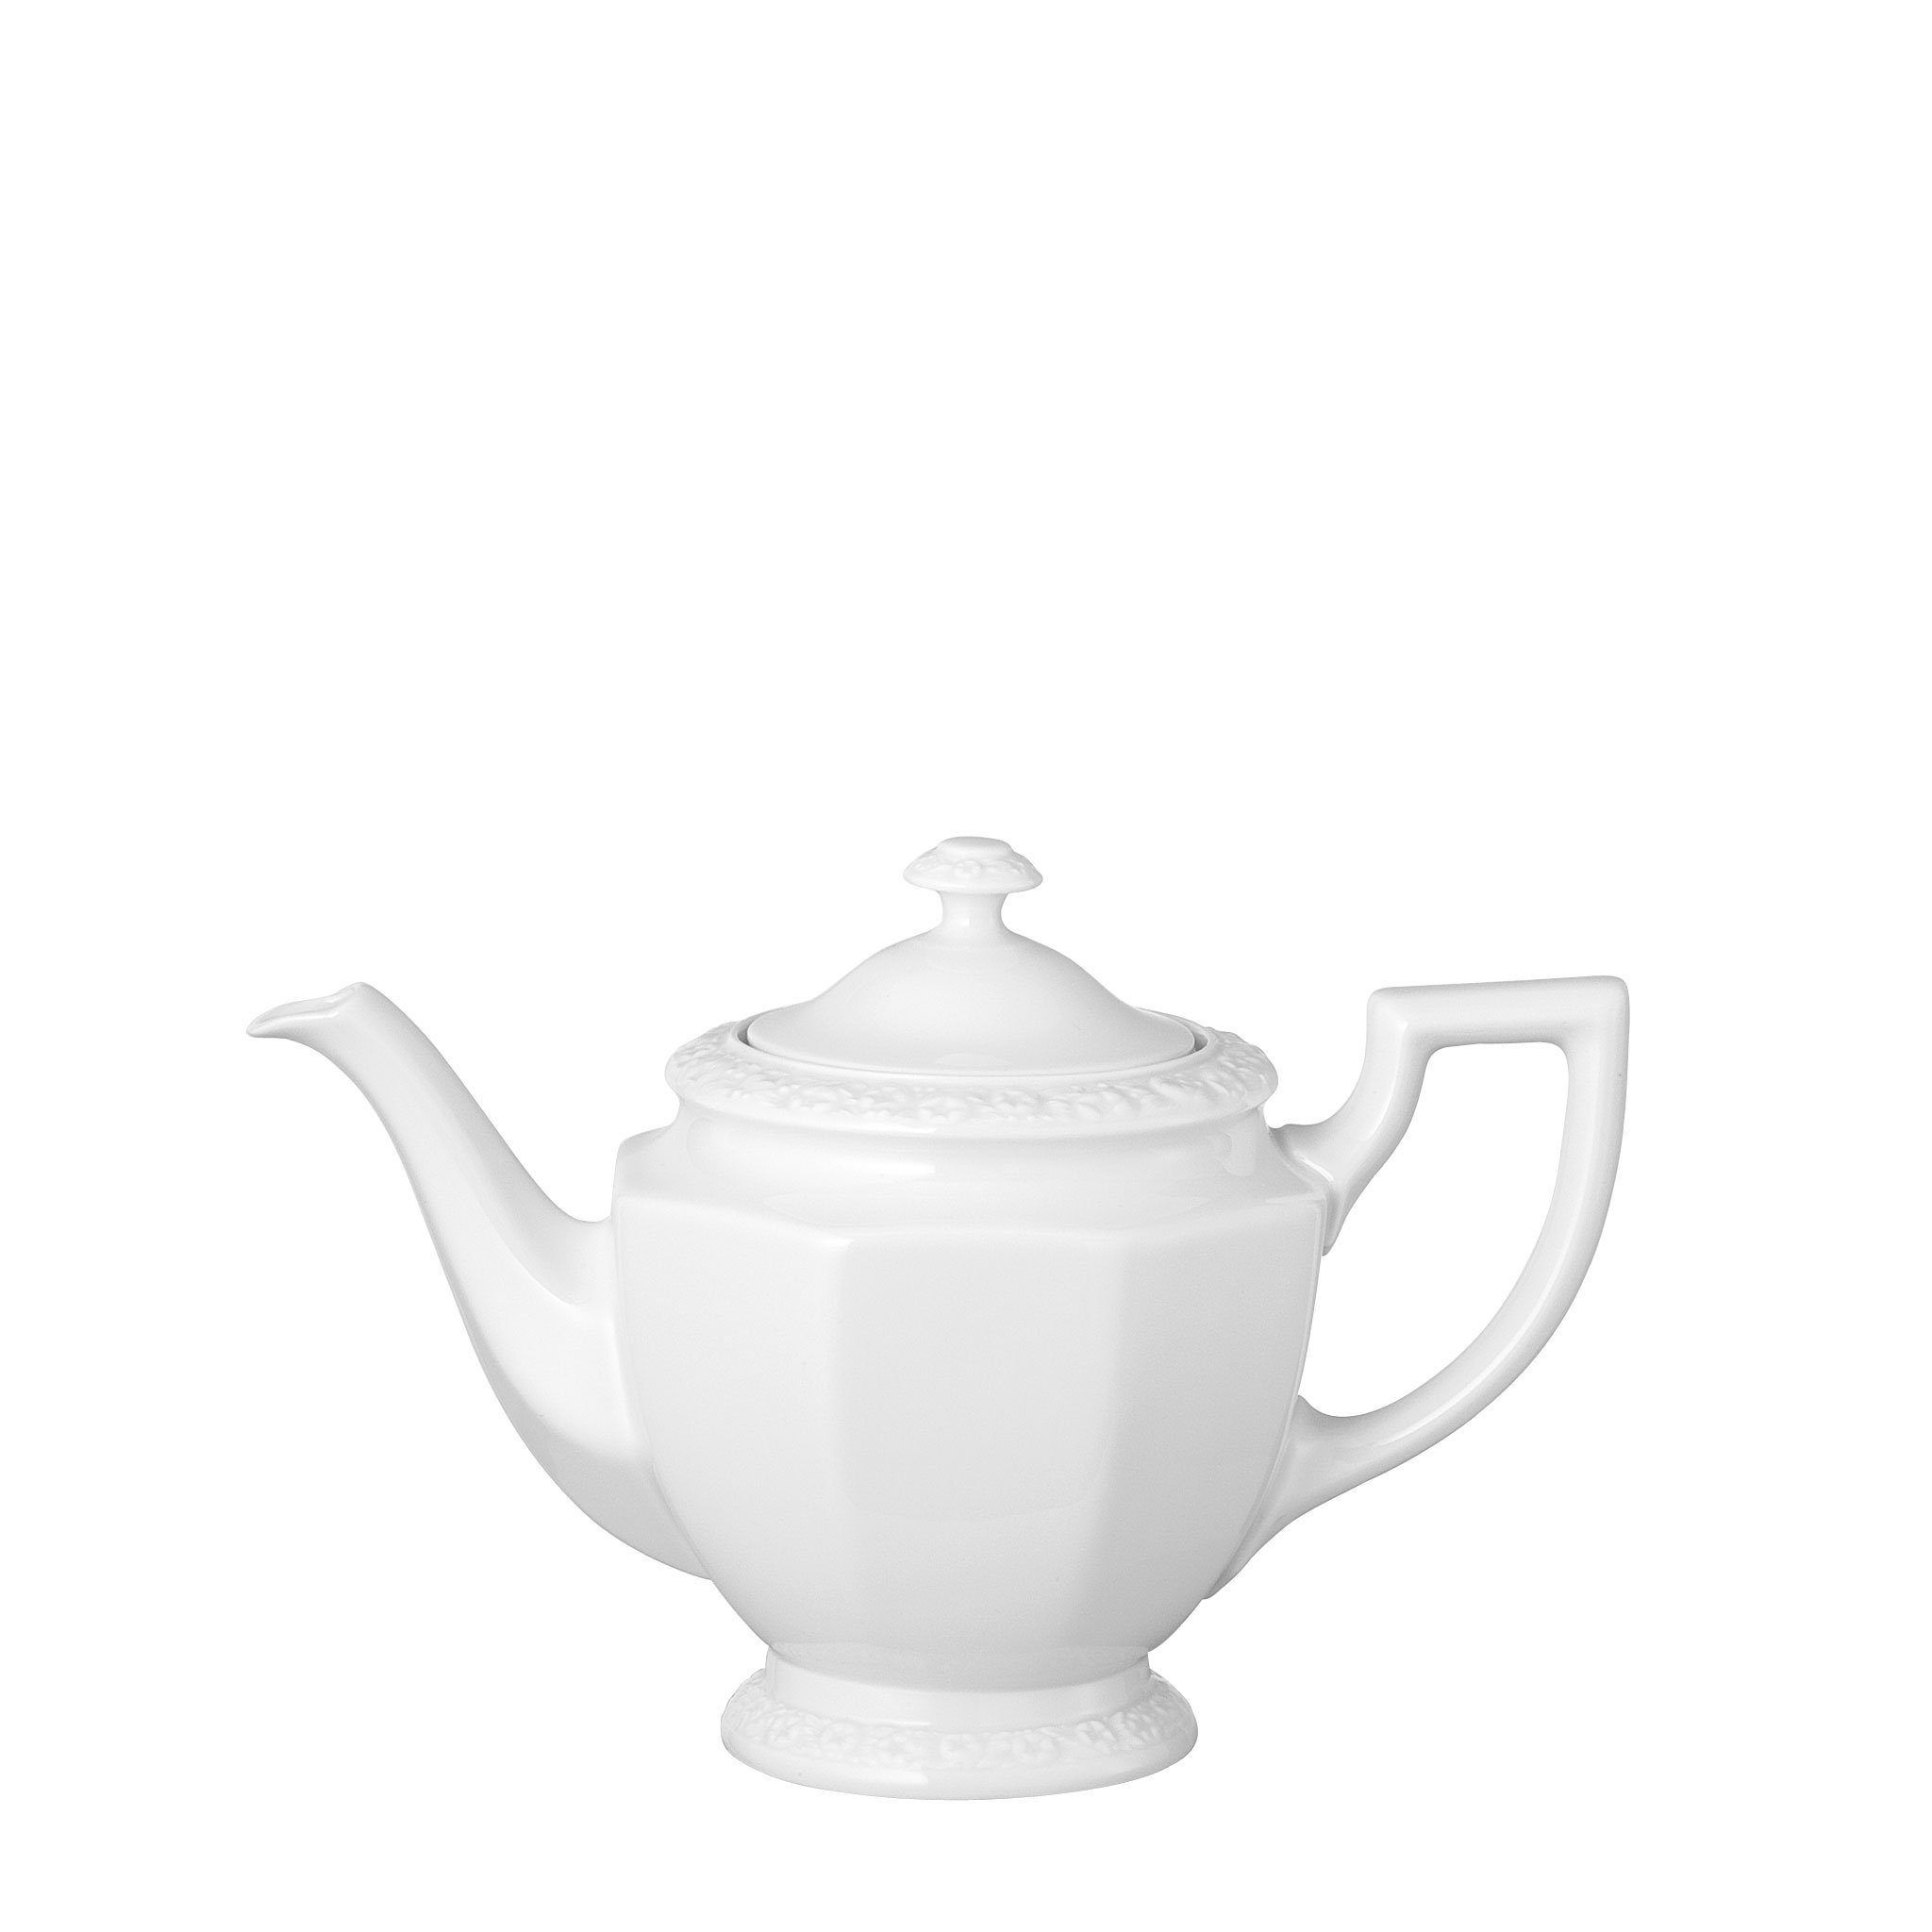 Rosenthal Teekanne Maria Weiß Teekanne 12 Personen, 1.25 l